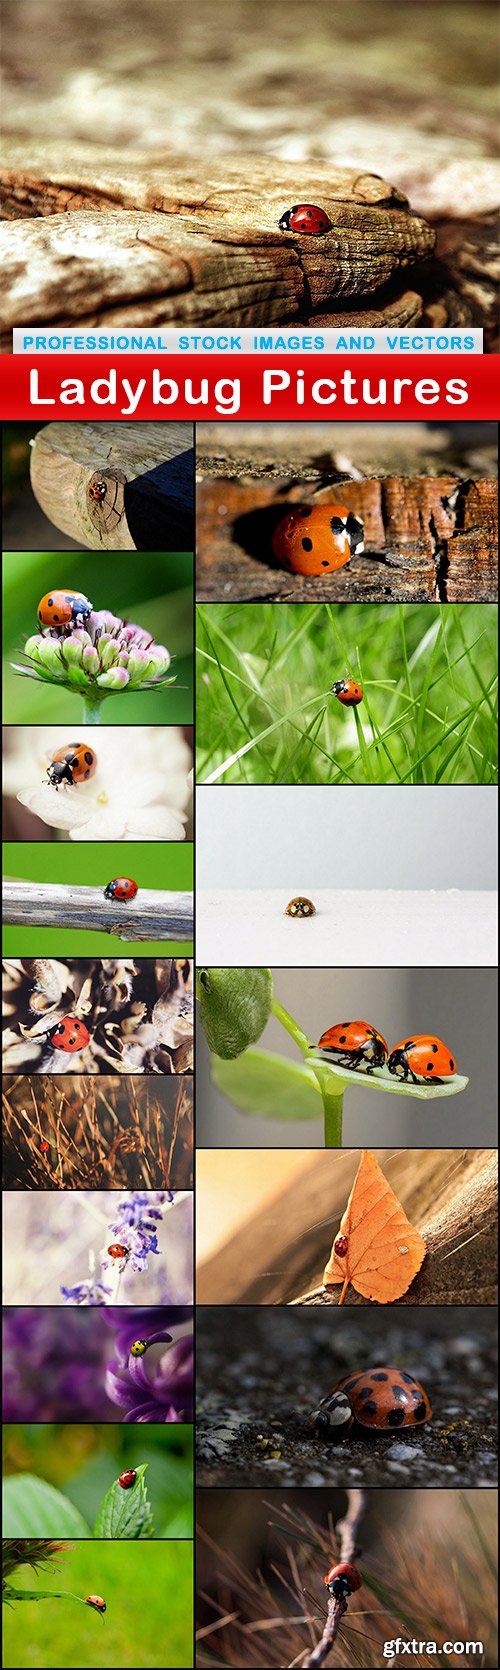 Ladybug Pictures - 18 UHQ JPEG